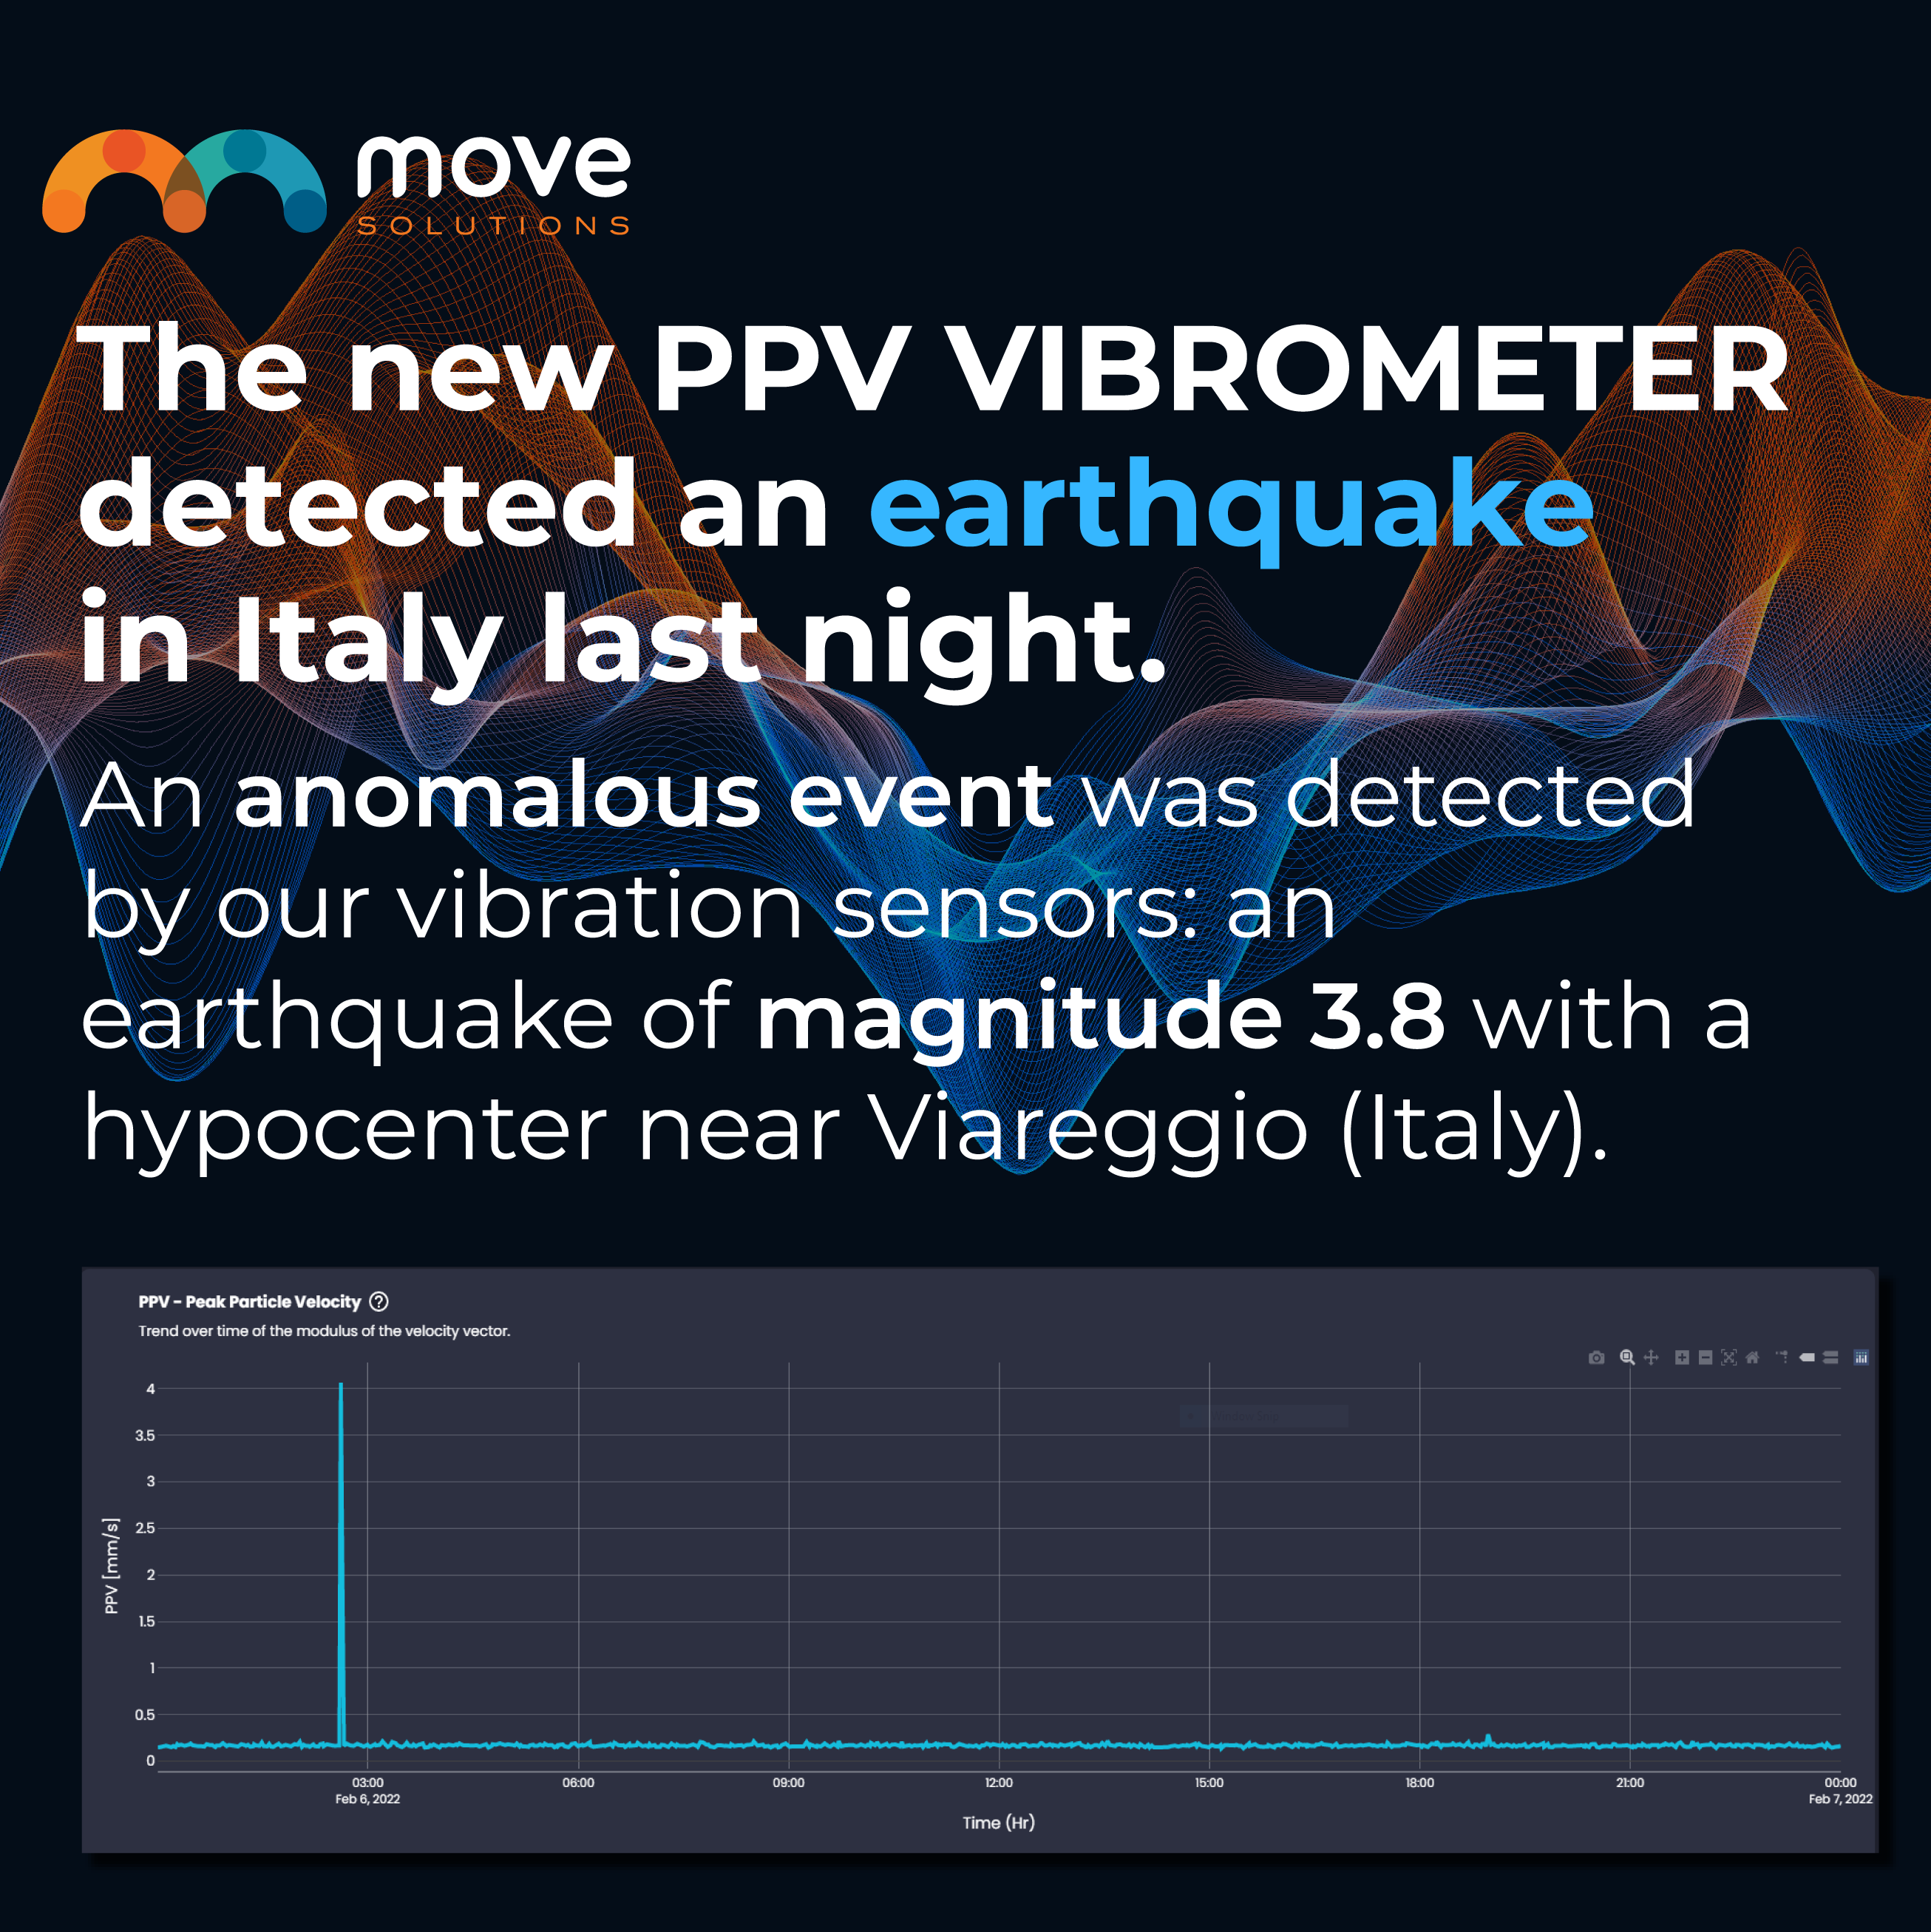 PPV vibrometer for earthquake